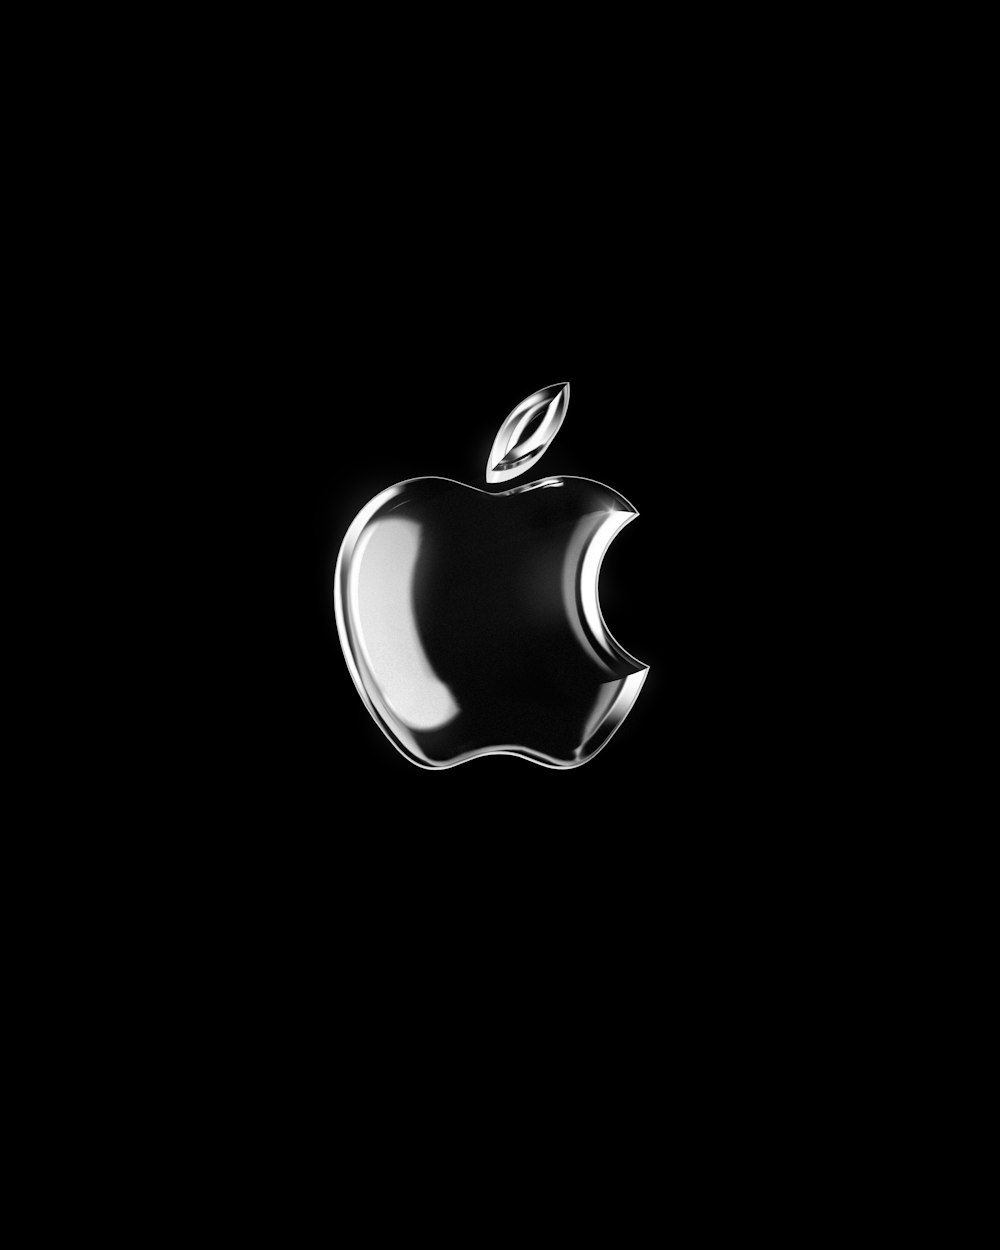 an apple logo on a black background